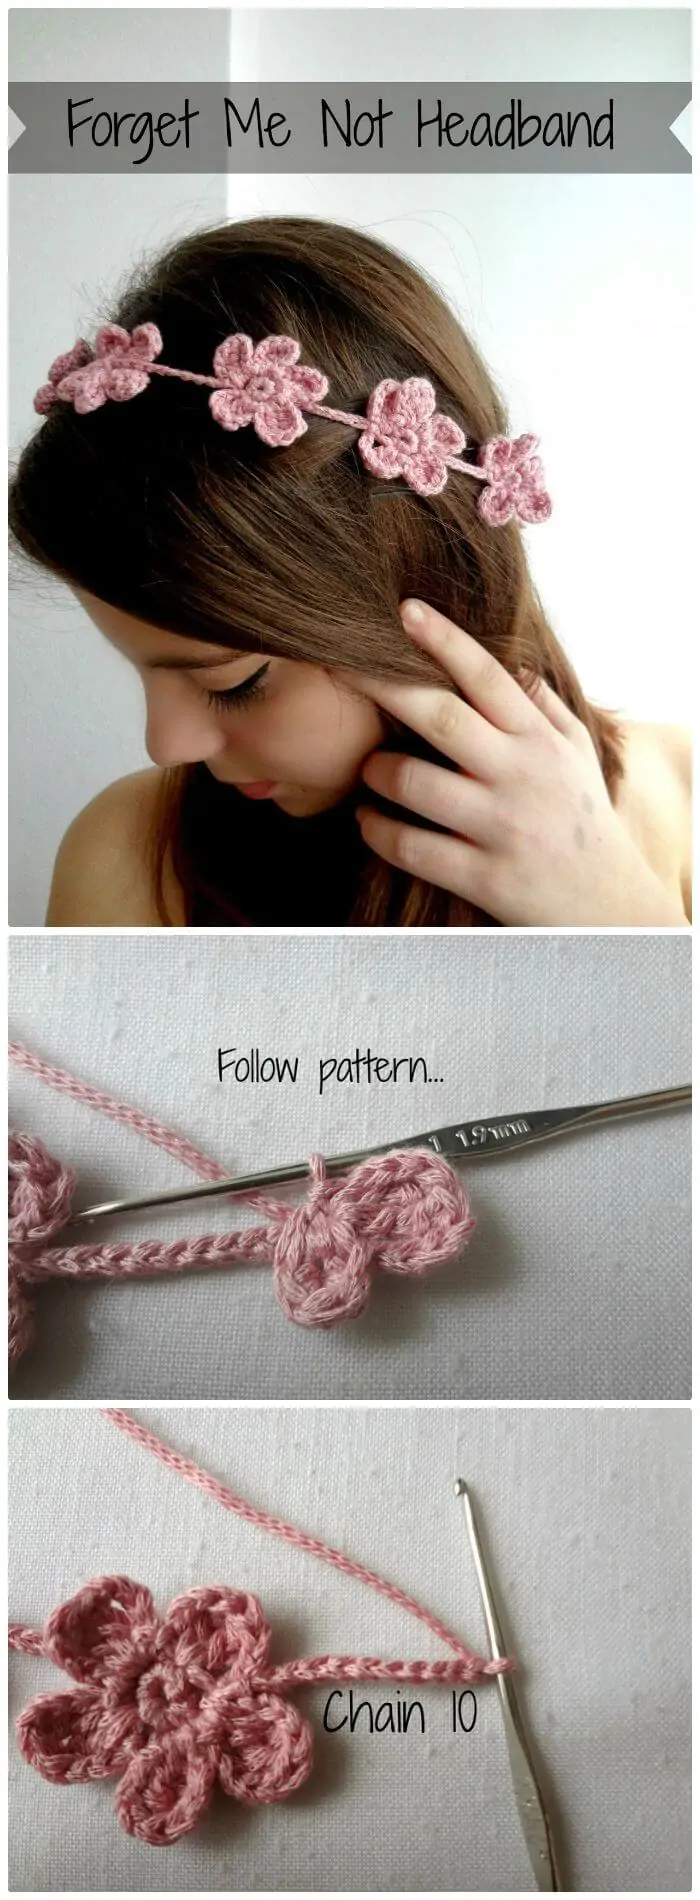 Crochet Forget Me Not Headband - Tutorial gratuito